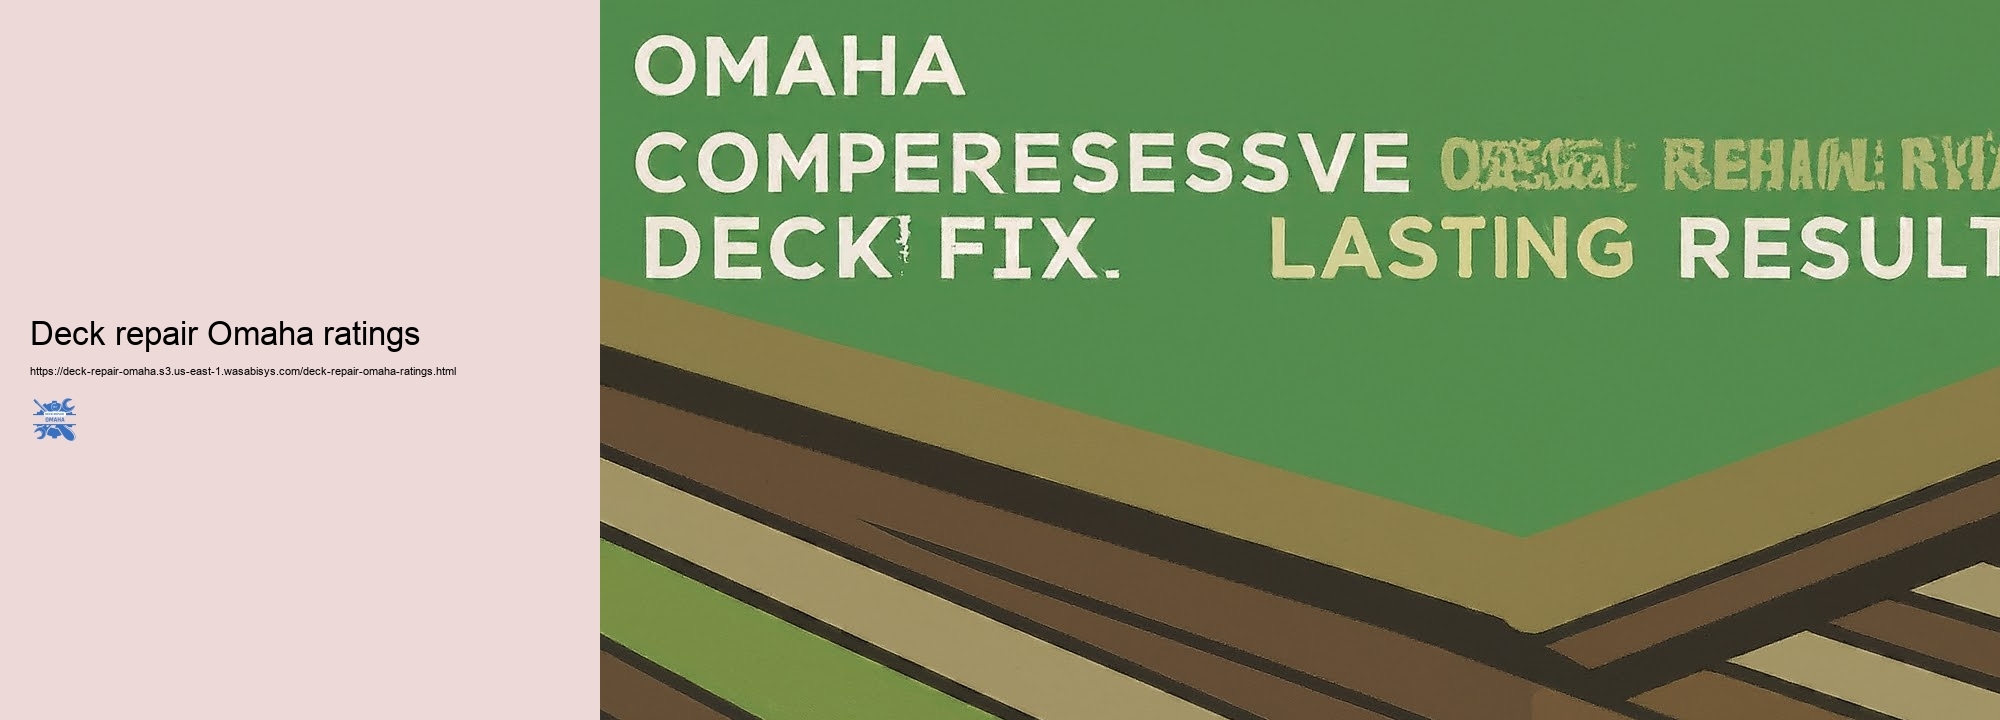 Spending plan Friendly Deck Repair Solutions for Omaha Citizens